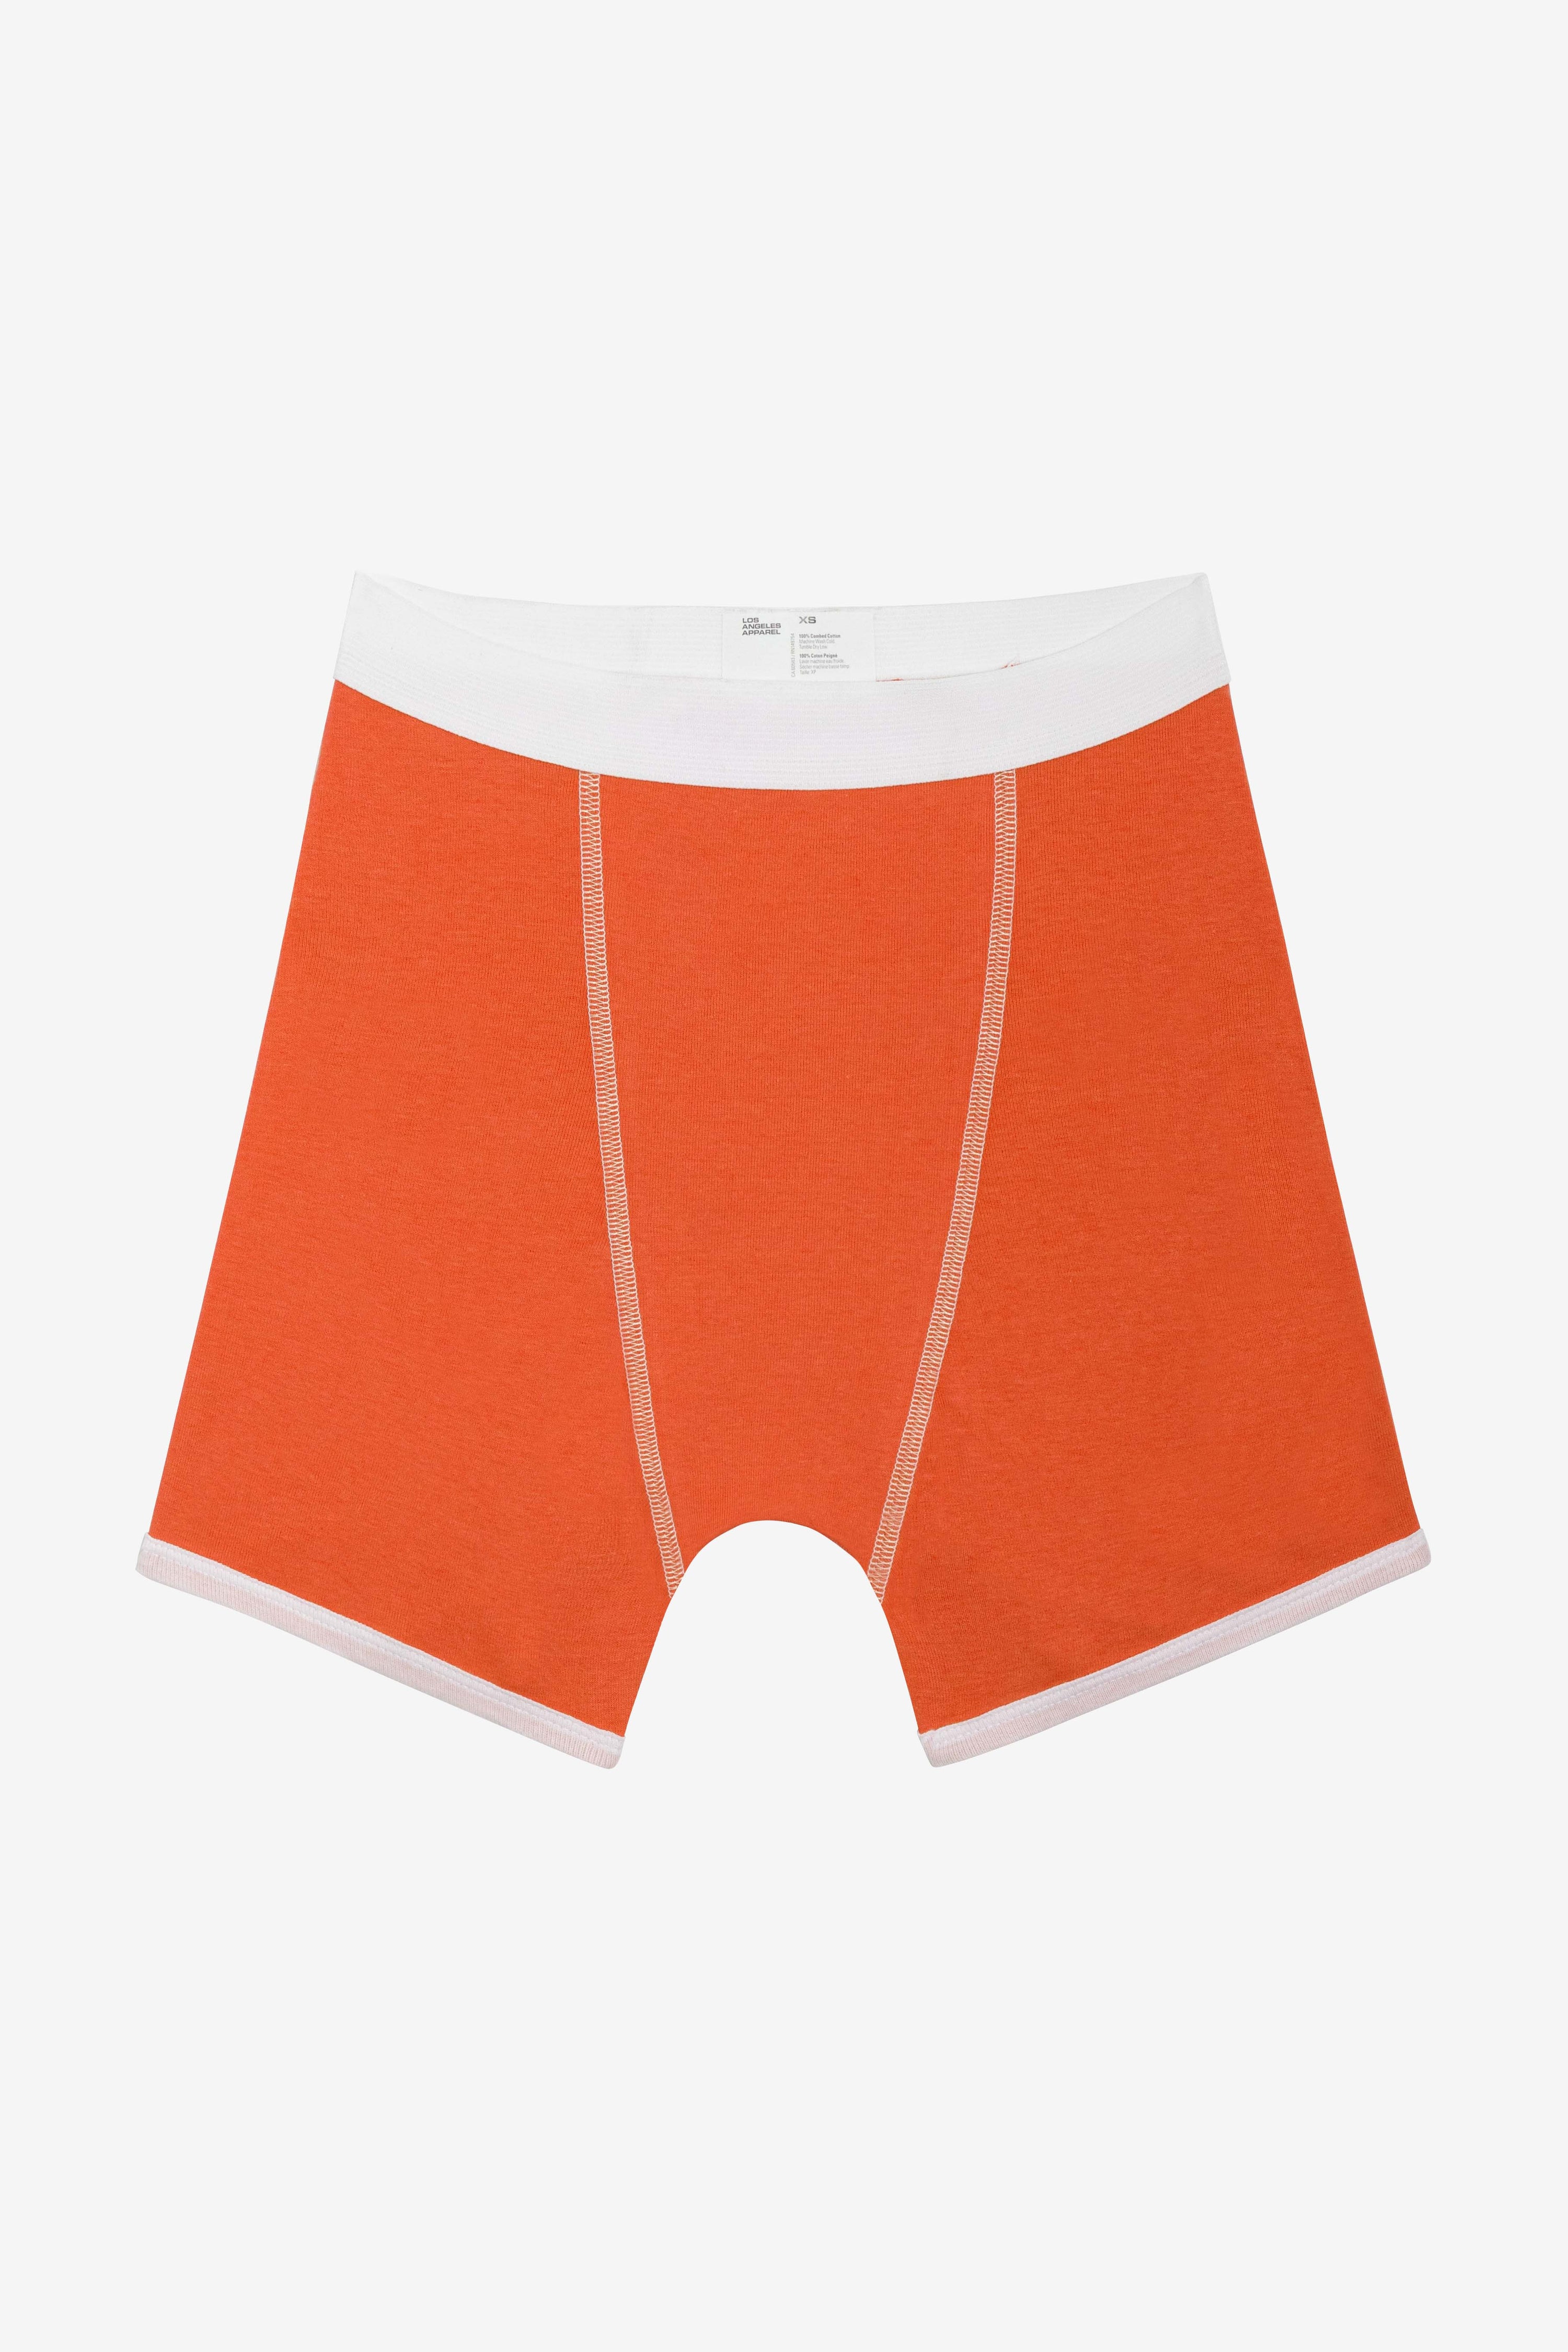 Toot Renew MESH Men's Underwear, Orange, Orange, Large : :  Clothing, Shoes & Accessories